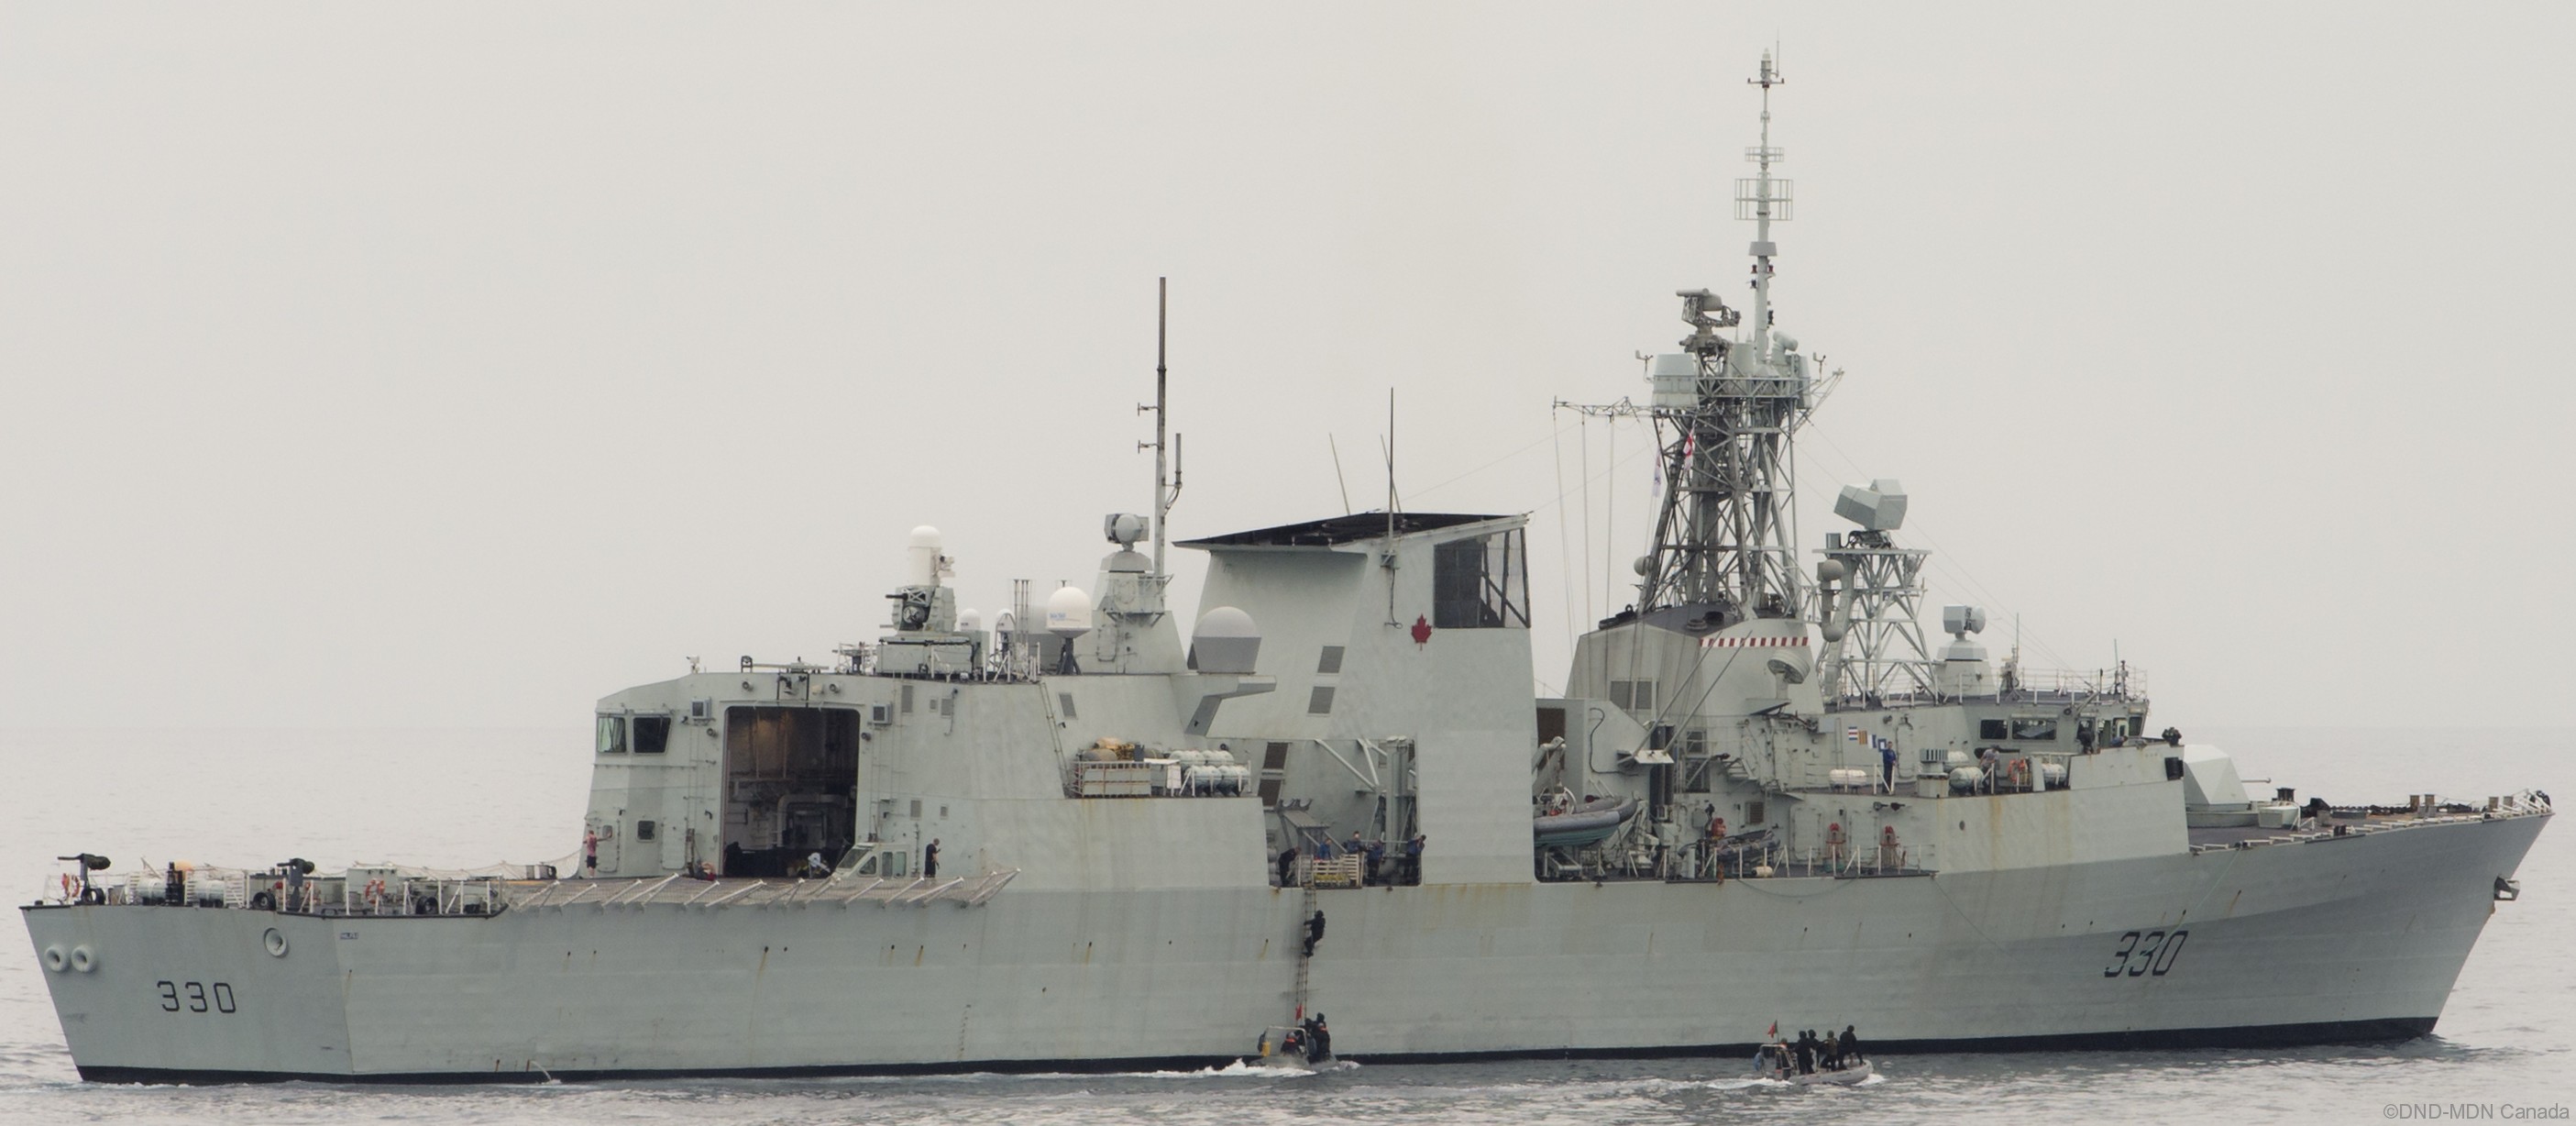 ffh-330 hmcs halifax class helicopter patrol frigate royal canadian navy rcn ncsm marine royale canadienne 05